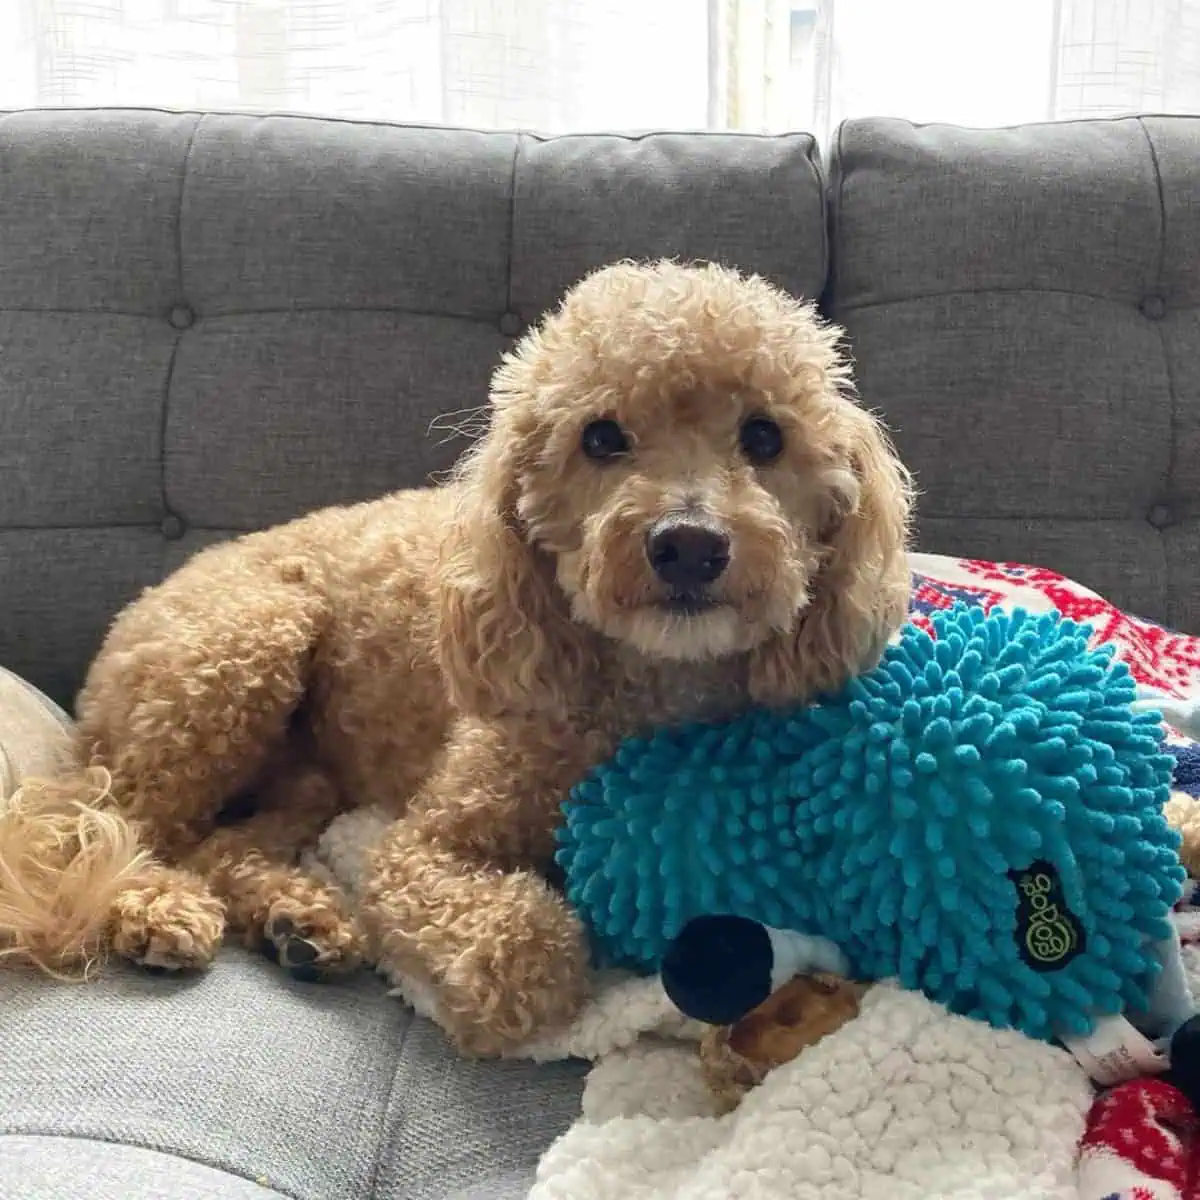 Poodle cuddling a toy